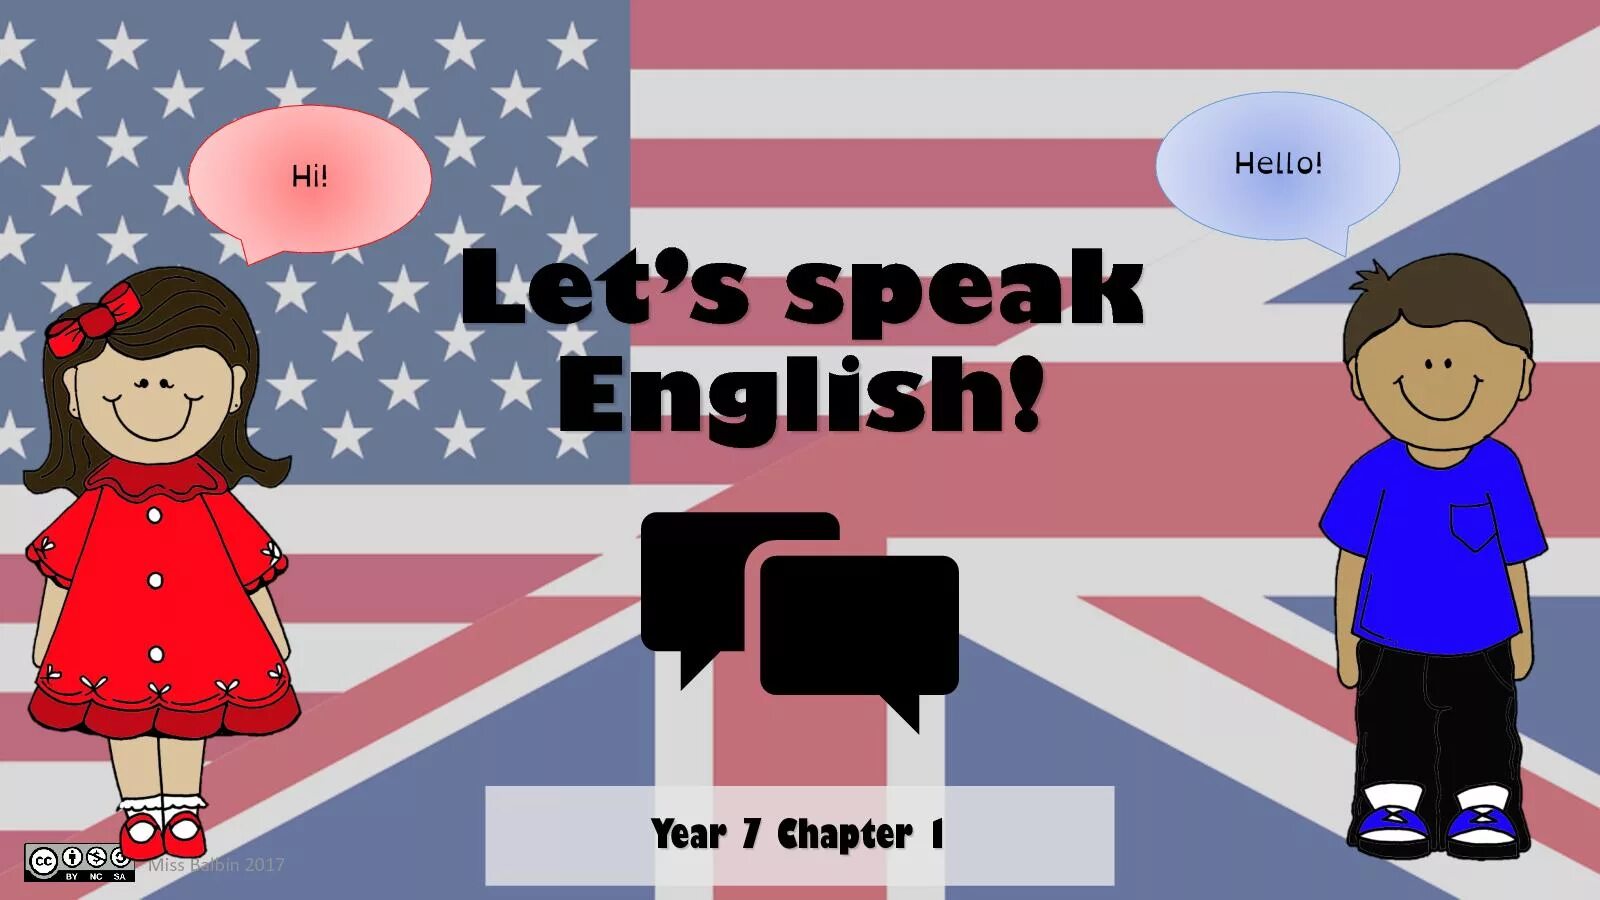 Let's speak English. Lets speak in English. Lets speak English картинка. Speak English картинка для детей. 39 лет по английски